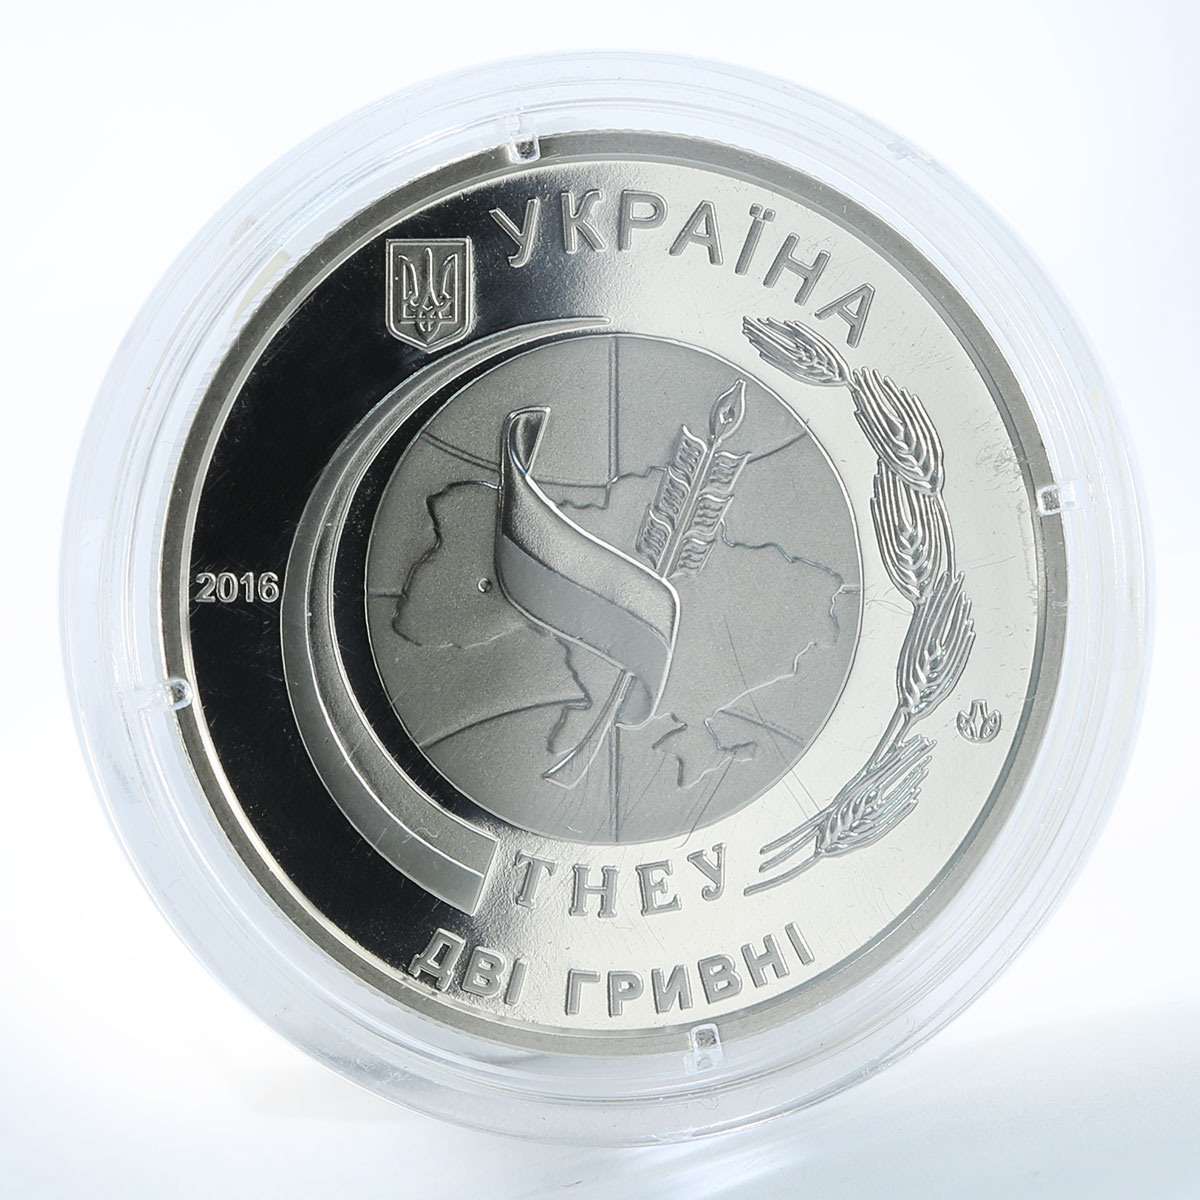 Ukraine 2 hryvnia 50 years of Ternopil Economic University flag nickel coin 2016